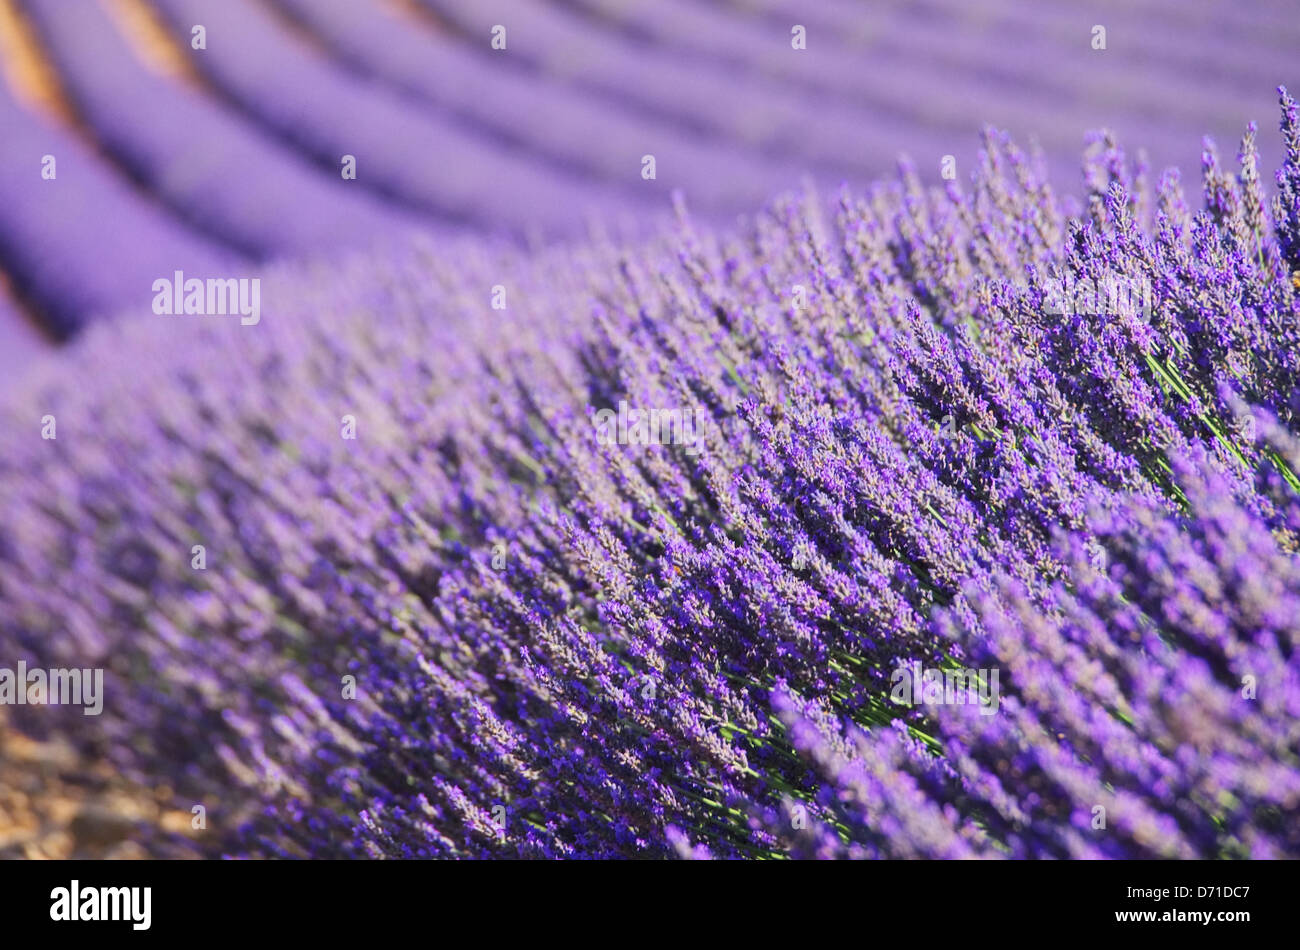 Lavendelfeld - lavender field 99 Stock Photo